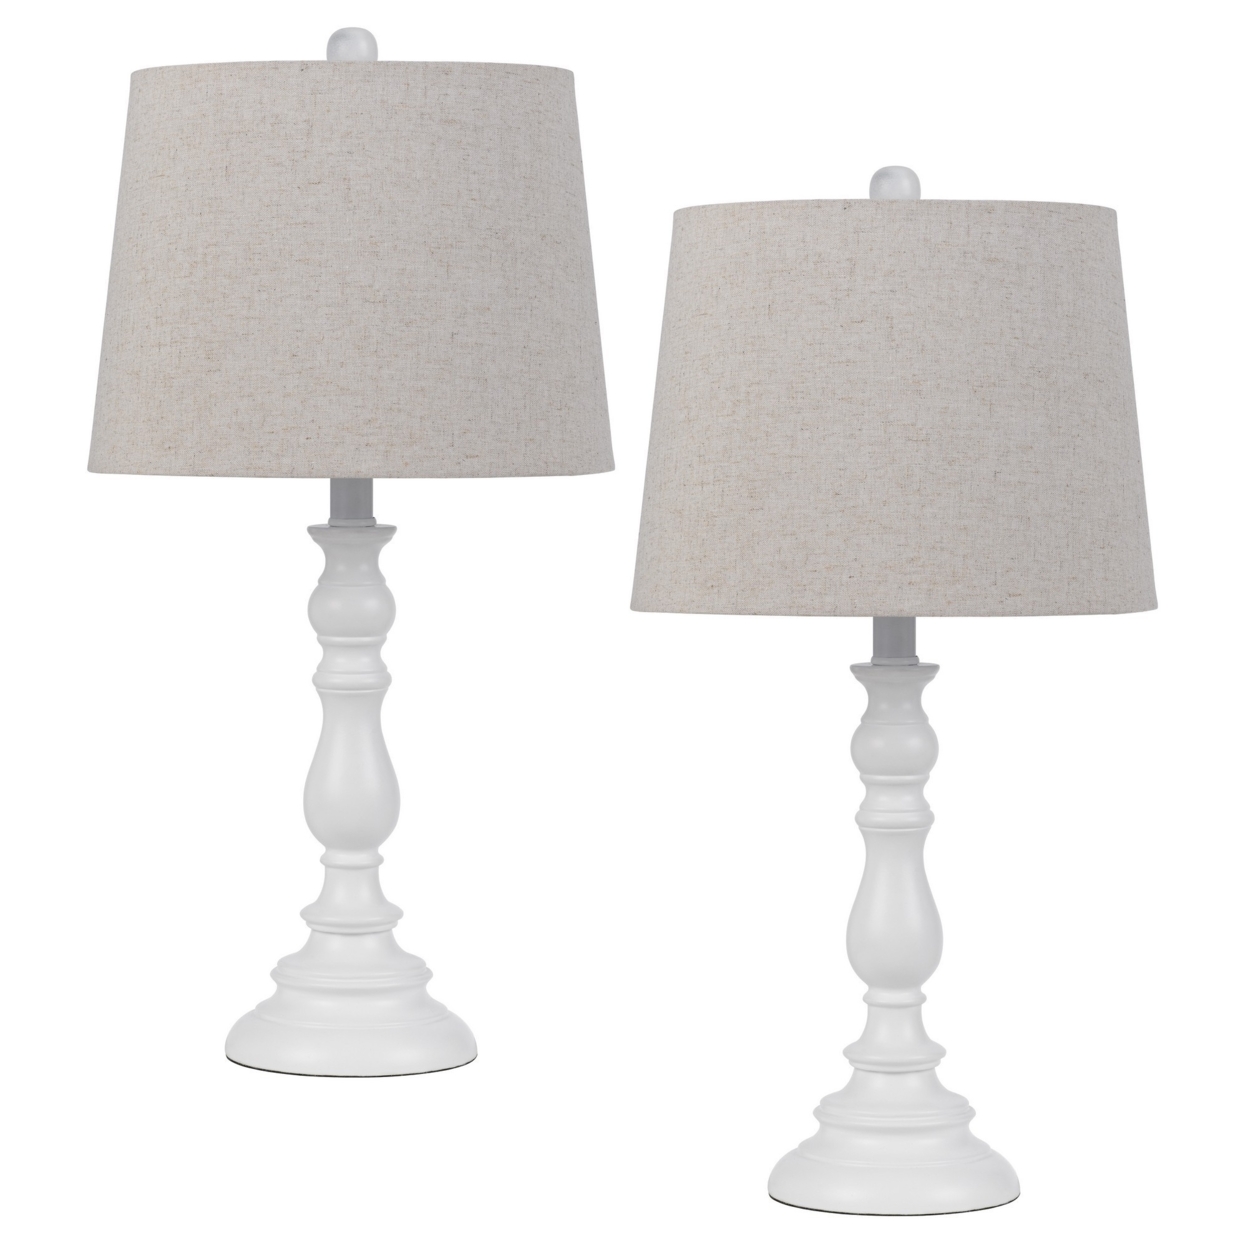 28 Inch Table Lamp, Set Of 2, Beige Fabric Shades, White Turned Frame- Saltoro Sherpi